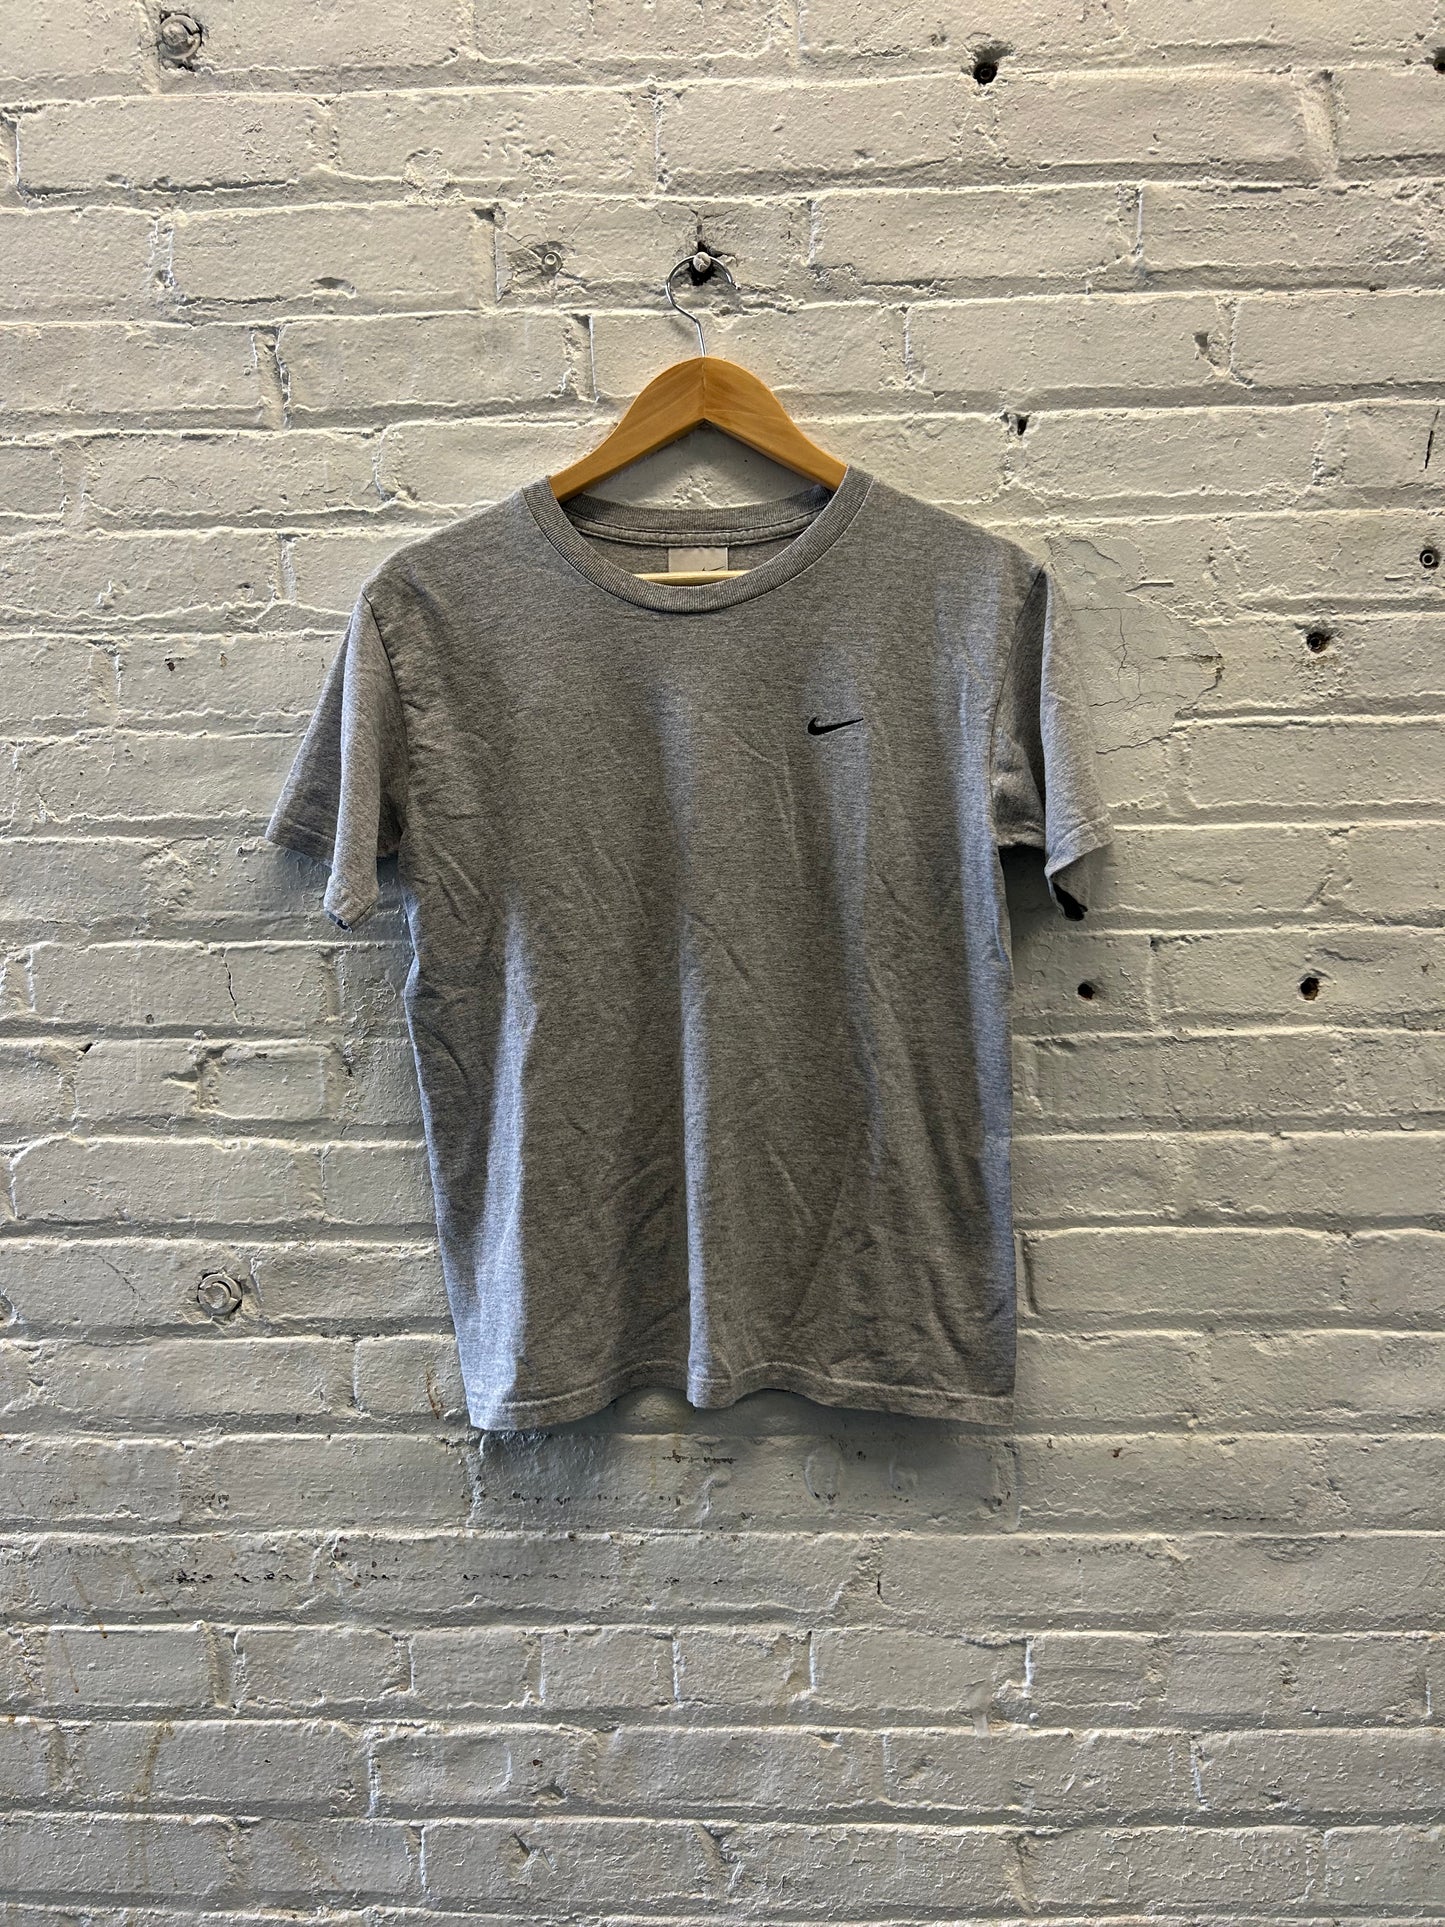 Nike Mini Swoosh Gray Shirt - Medium